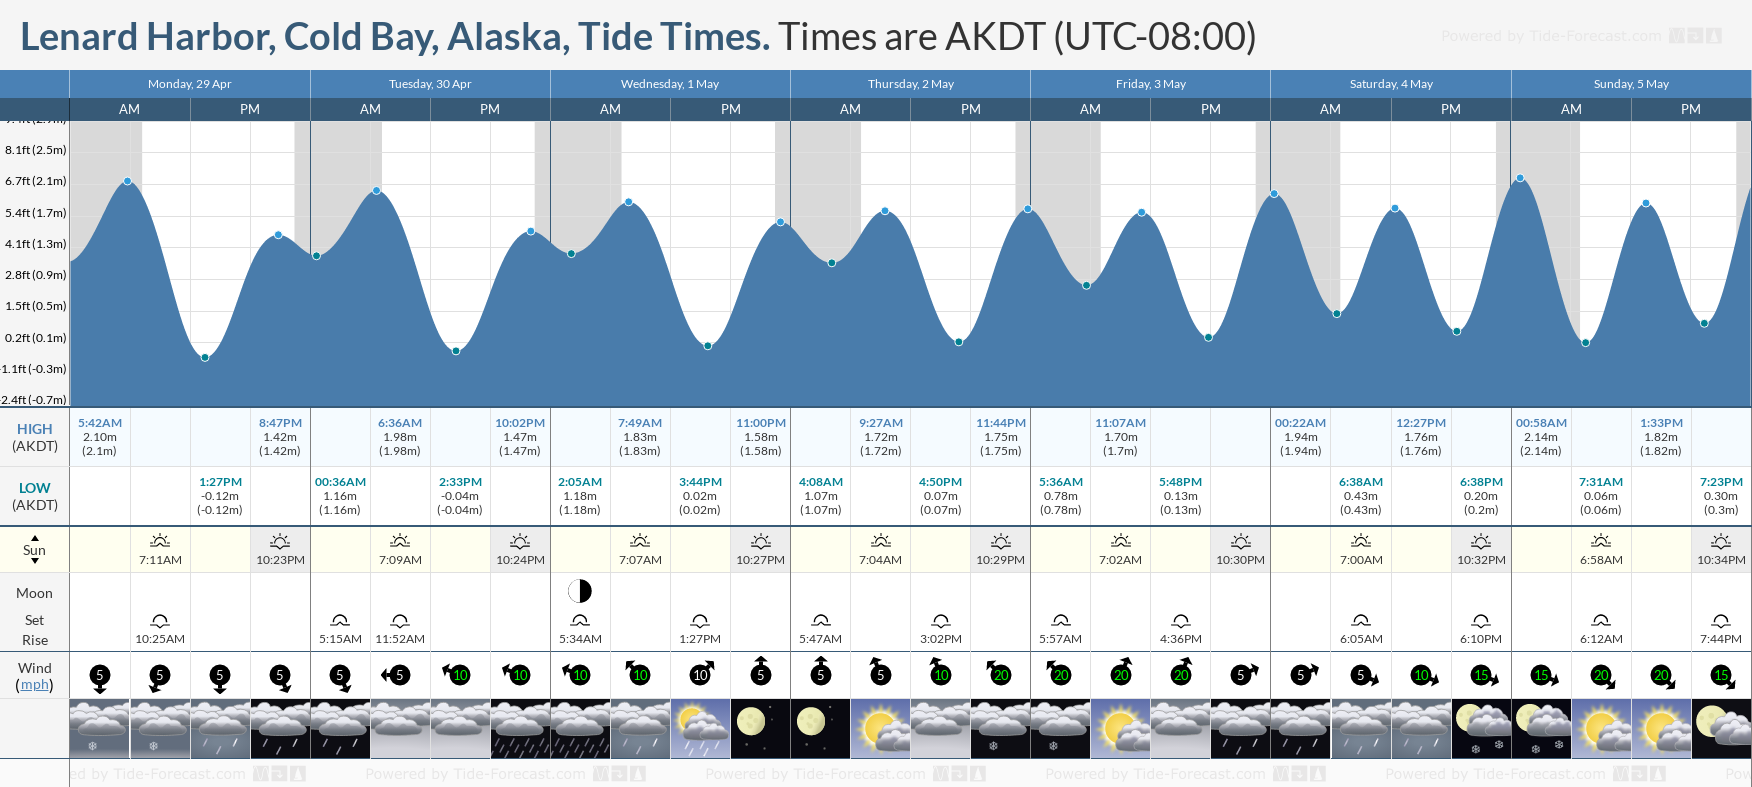 Lenard Harbor, Cold Bay, Alaska Tide Chart including high and low tide tide times for the next 7 days